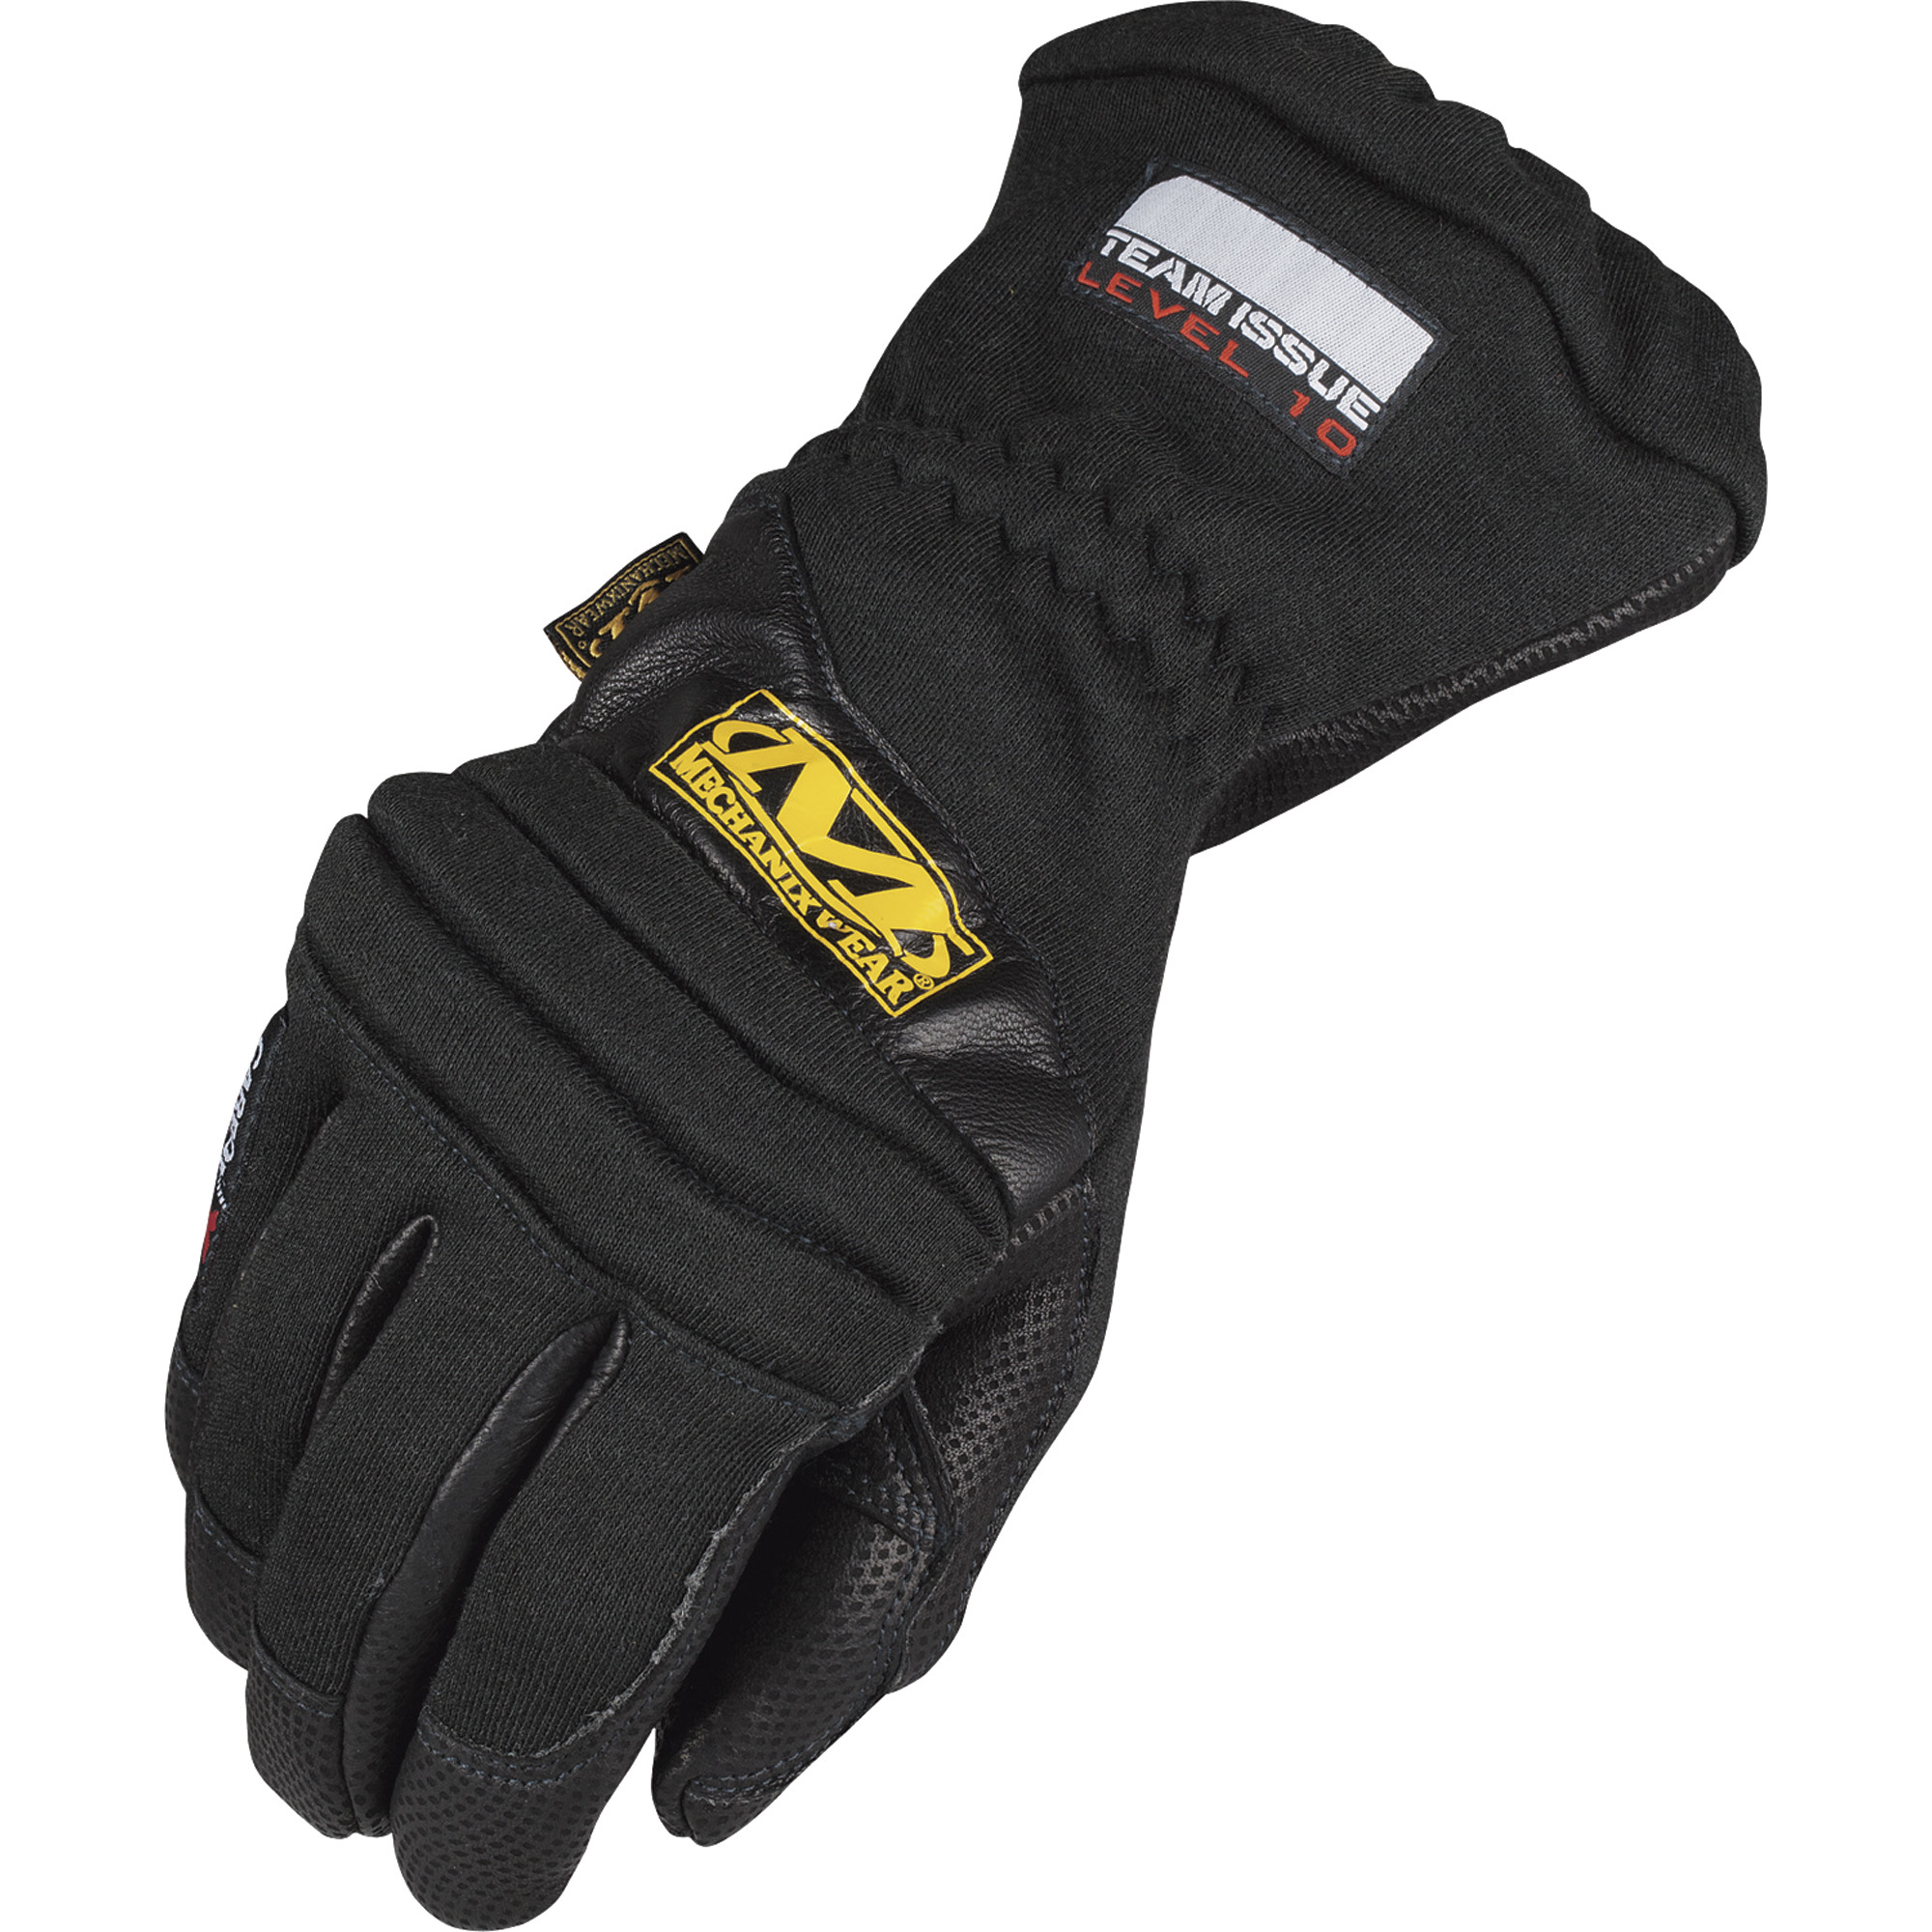 Mechanix Men's Wear Carbon-X Level 10 Glove - Black, 2XL, Model CXG-L10